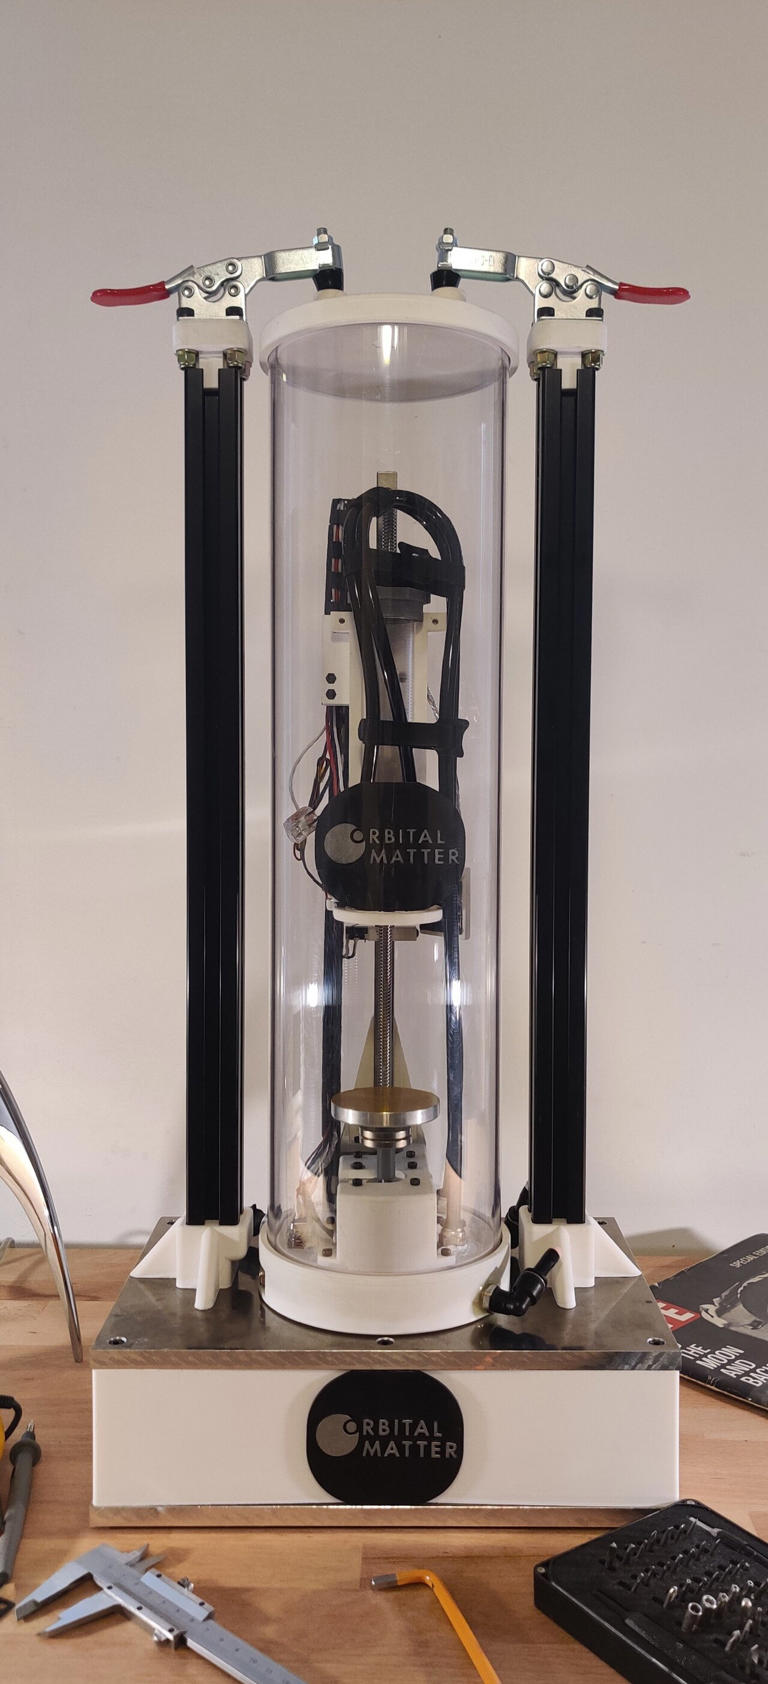 A prototype of the vacuum printer onboard Orbital Matter’s Replicator CubeSat. Credit: European Space Agency